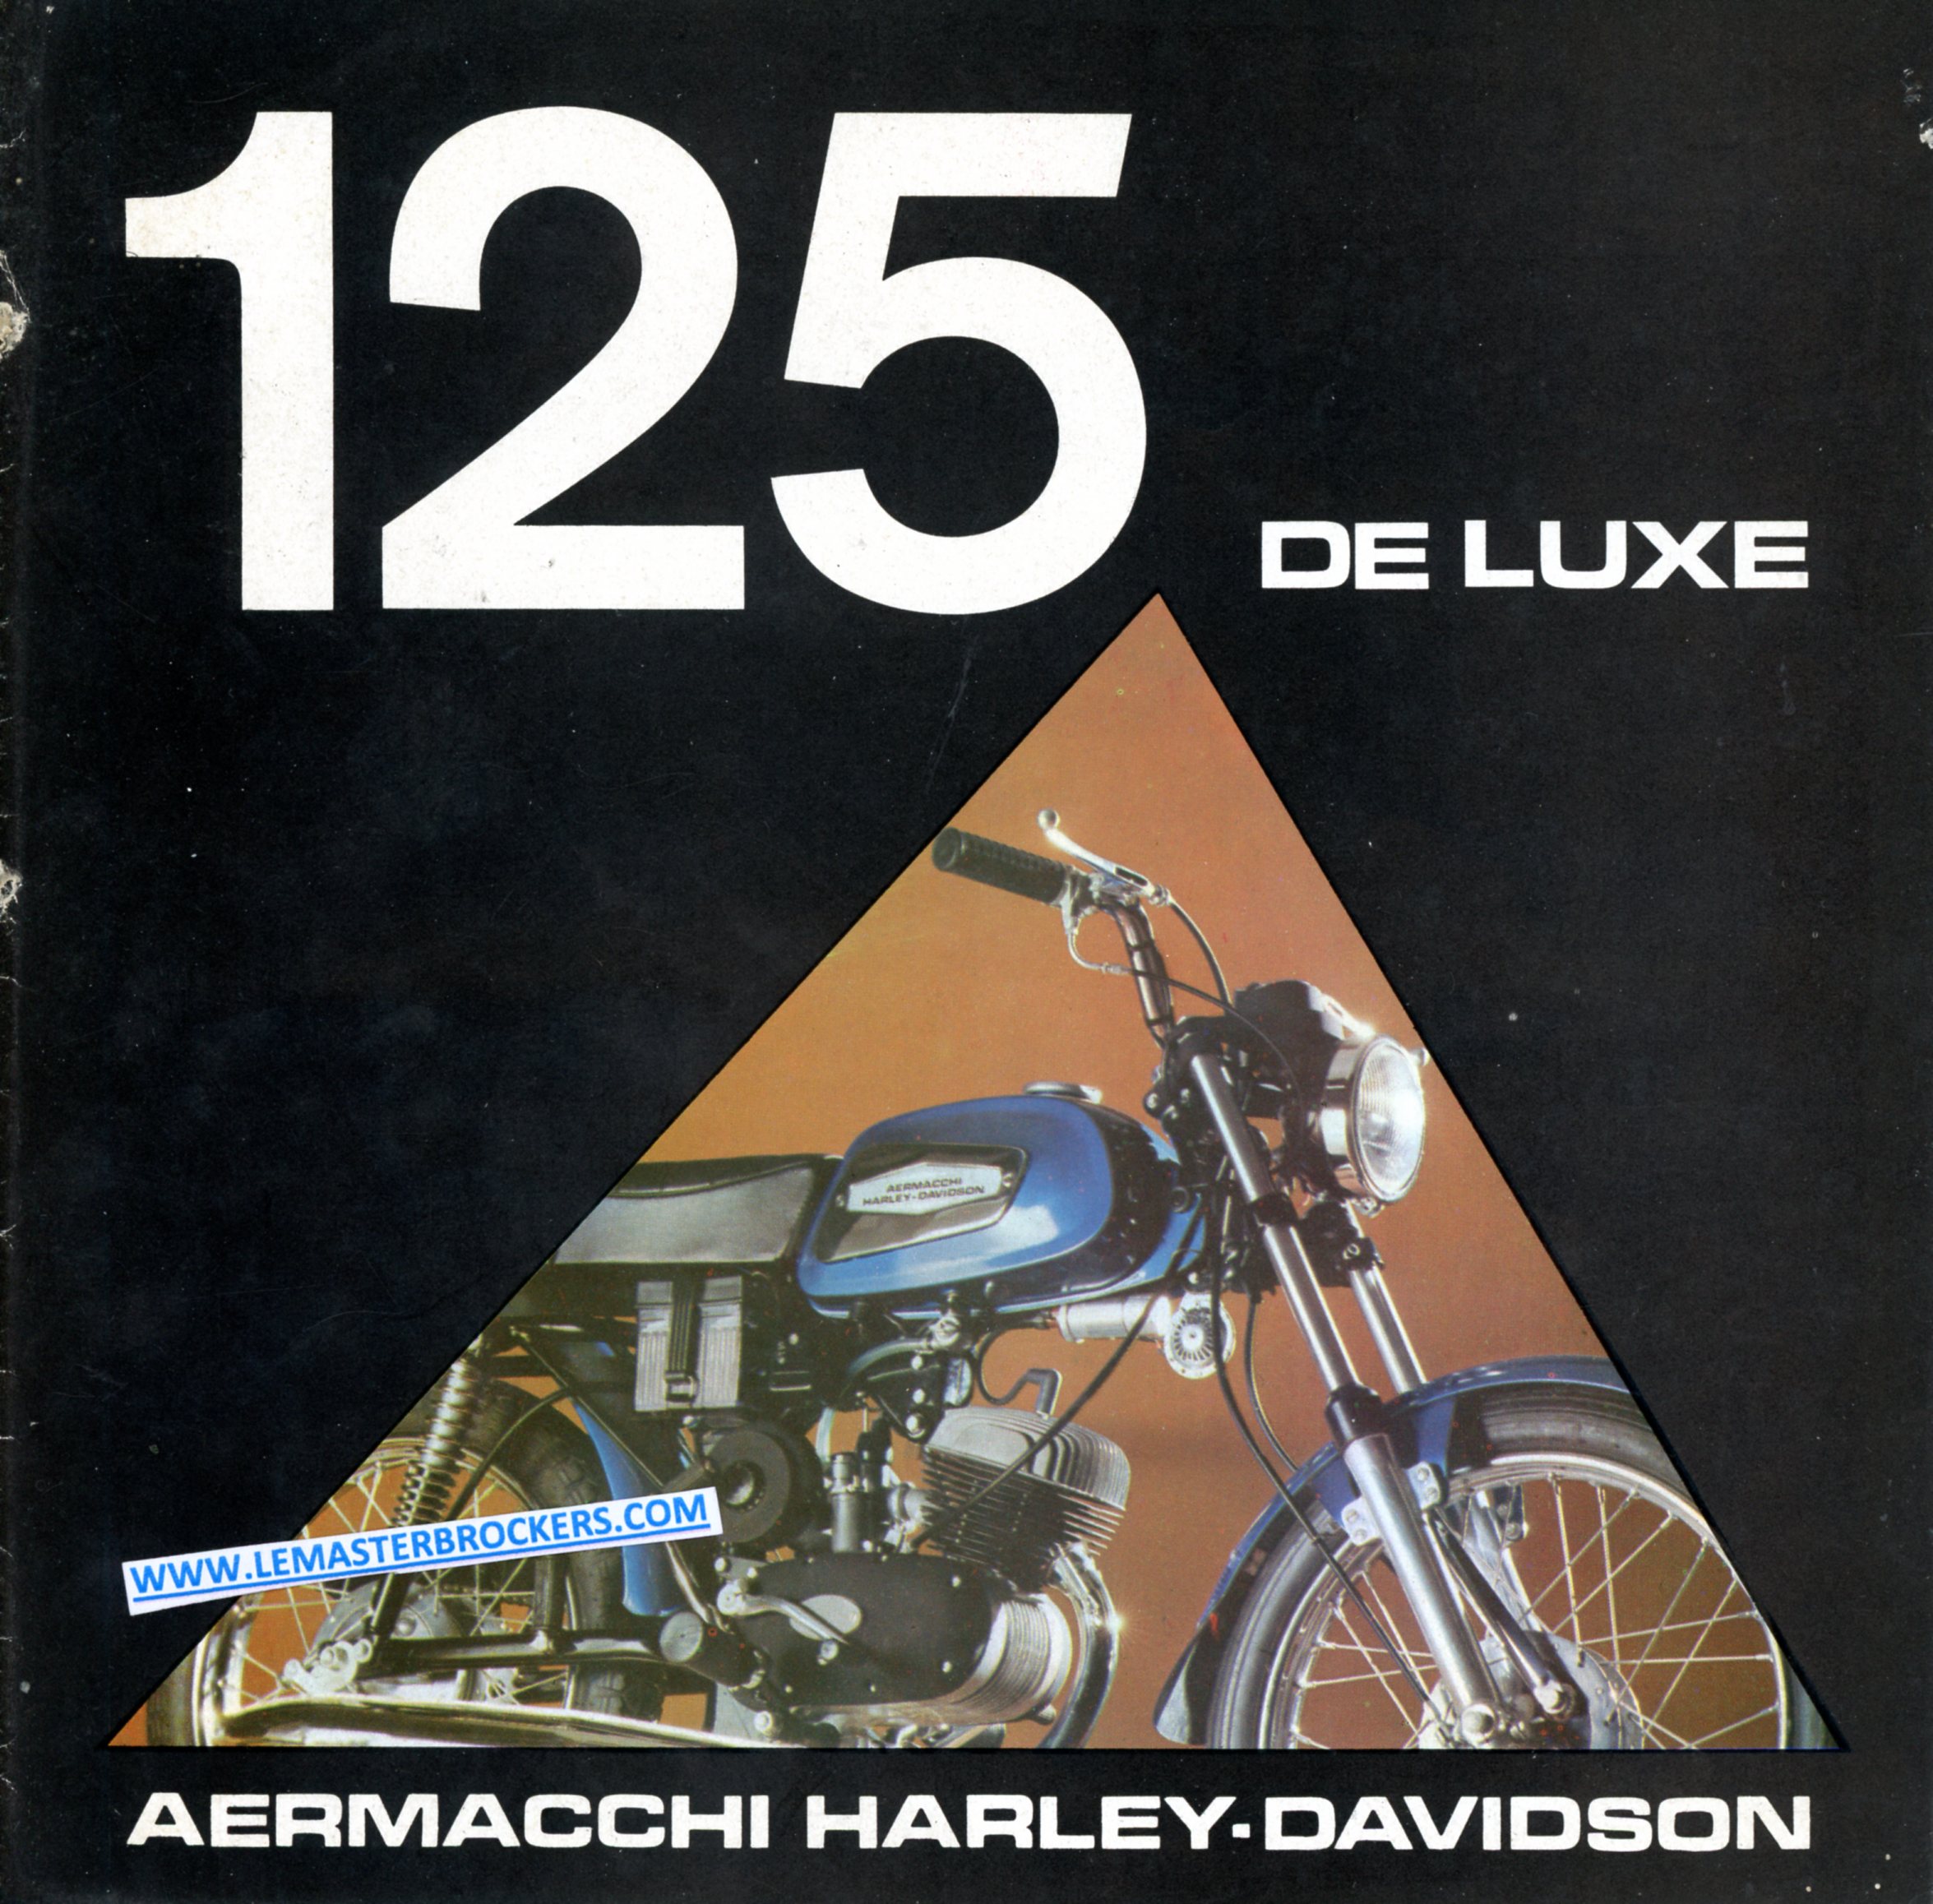 BROCHURE-MOTO-AERMACCHI-HARLEY-DAVIDSON-125-DELUXE-LEMASTERBROCKERS-MOTORCYCLES